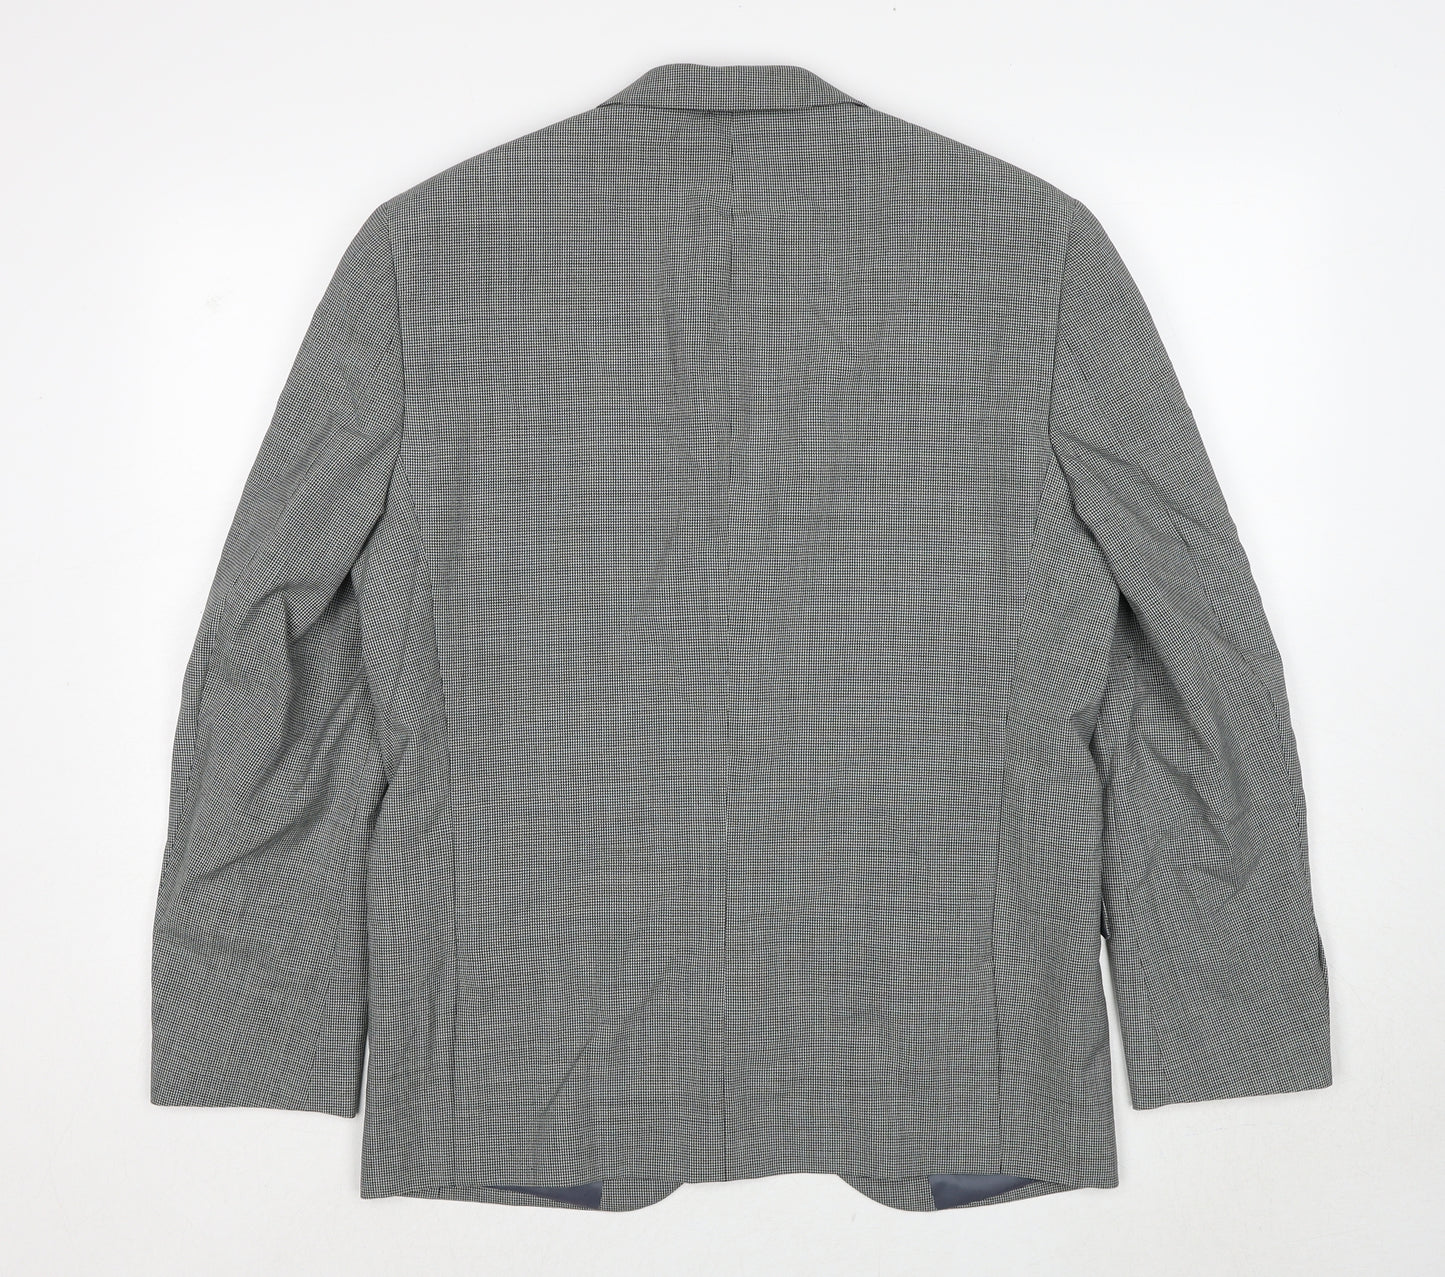 NEXT Mens Grey Geometric Wool Jacket Suit Jacket Size 40 Regular